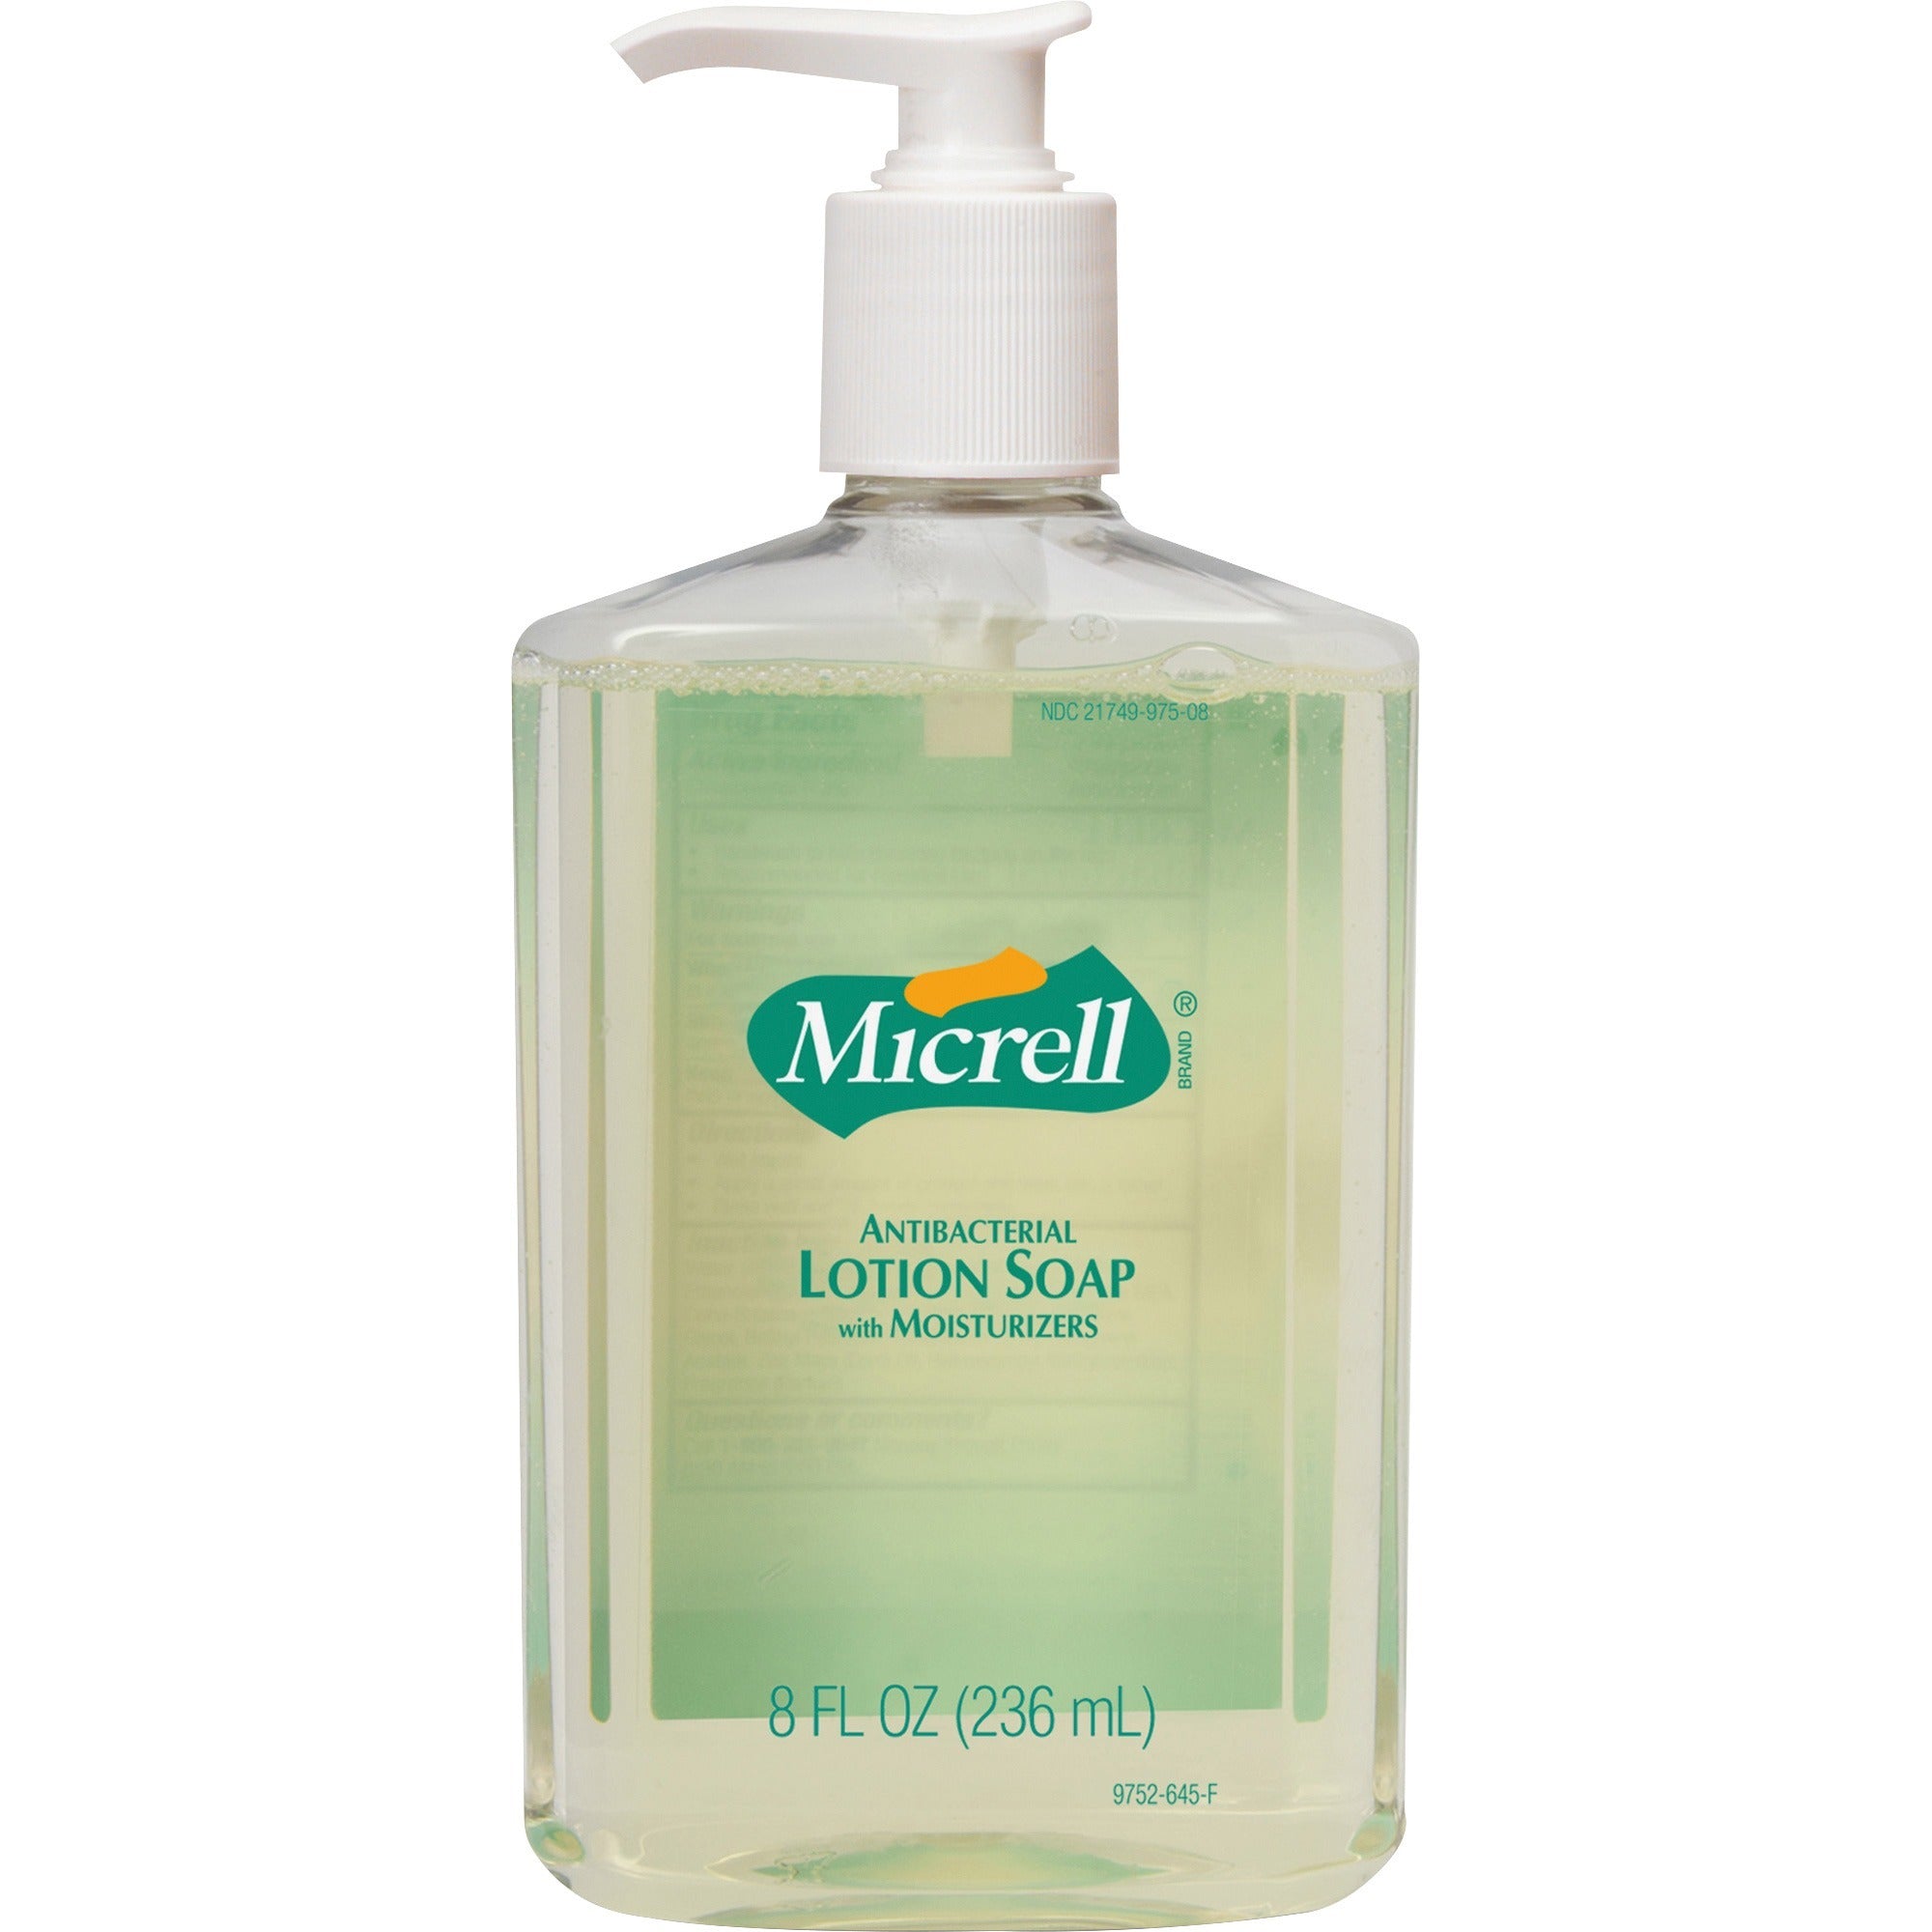 micrell-antibacterial-lotion-soap-citrus-scentfor-8-fl-oz-2366-ml-pump-bottle-dispenser-kill-germs-grease-remover-hand-anti-irritant-bio-based-12-carton_goj975212ct - 2